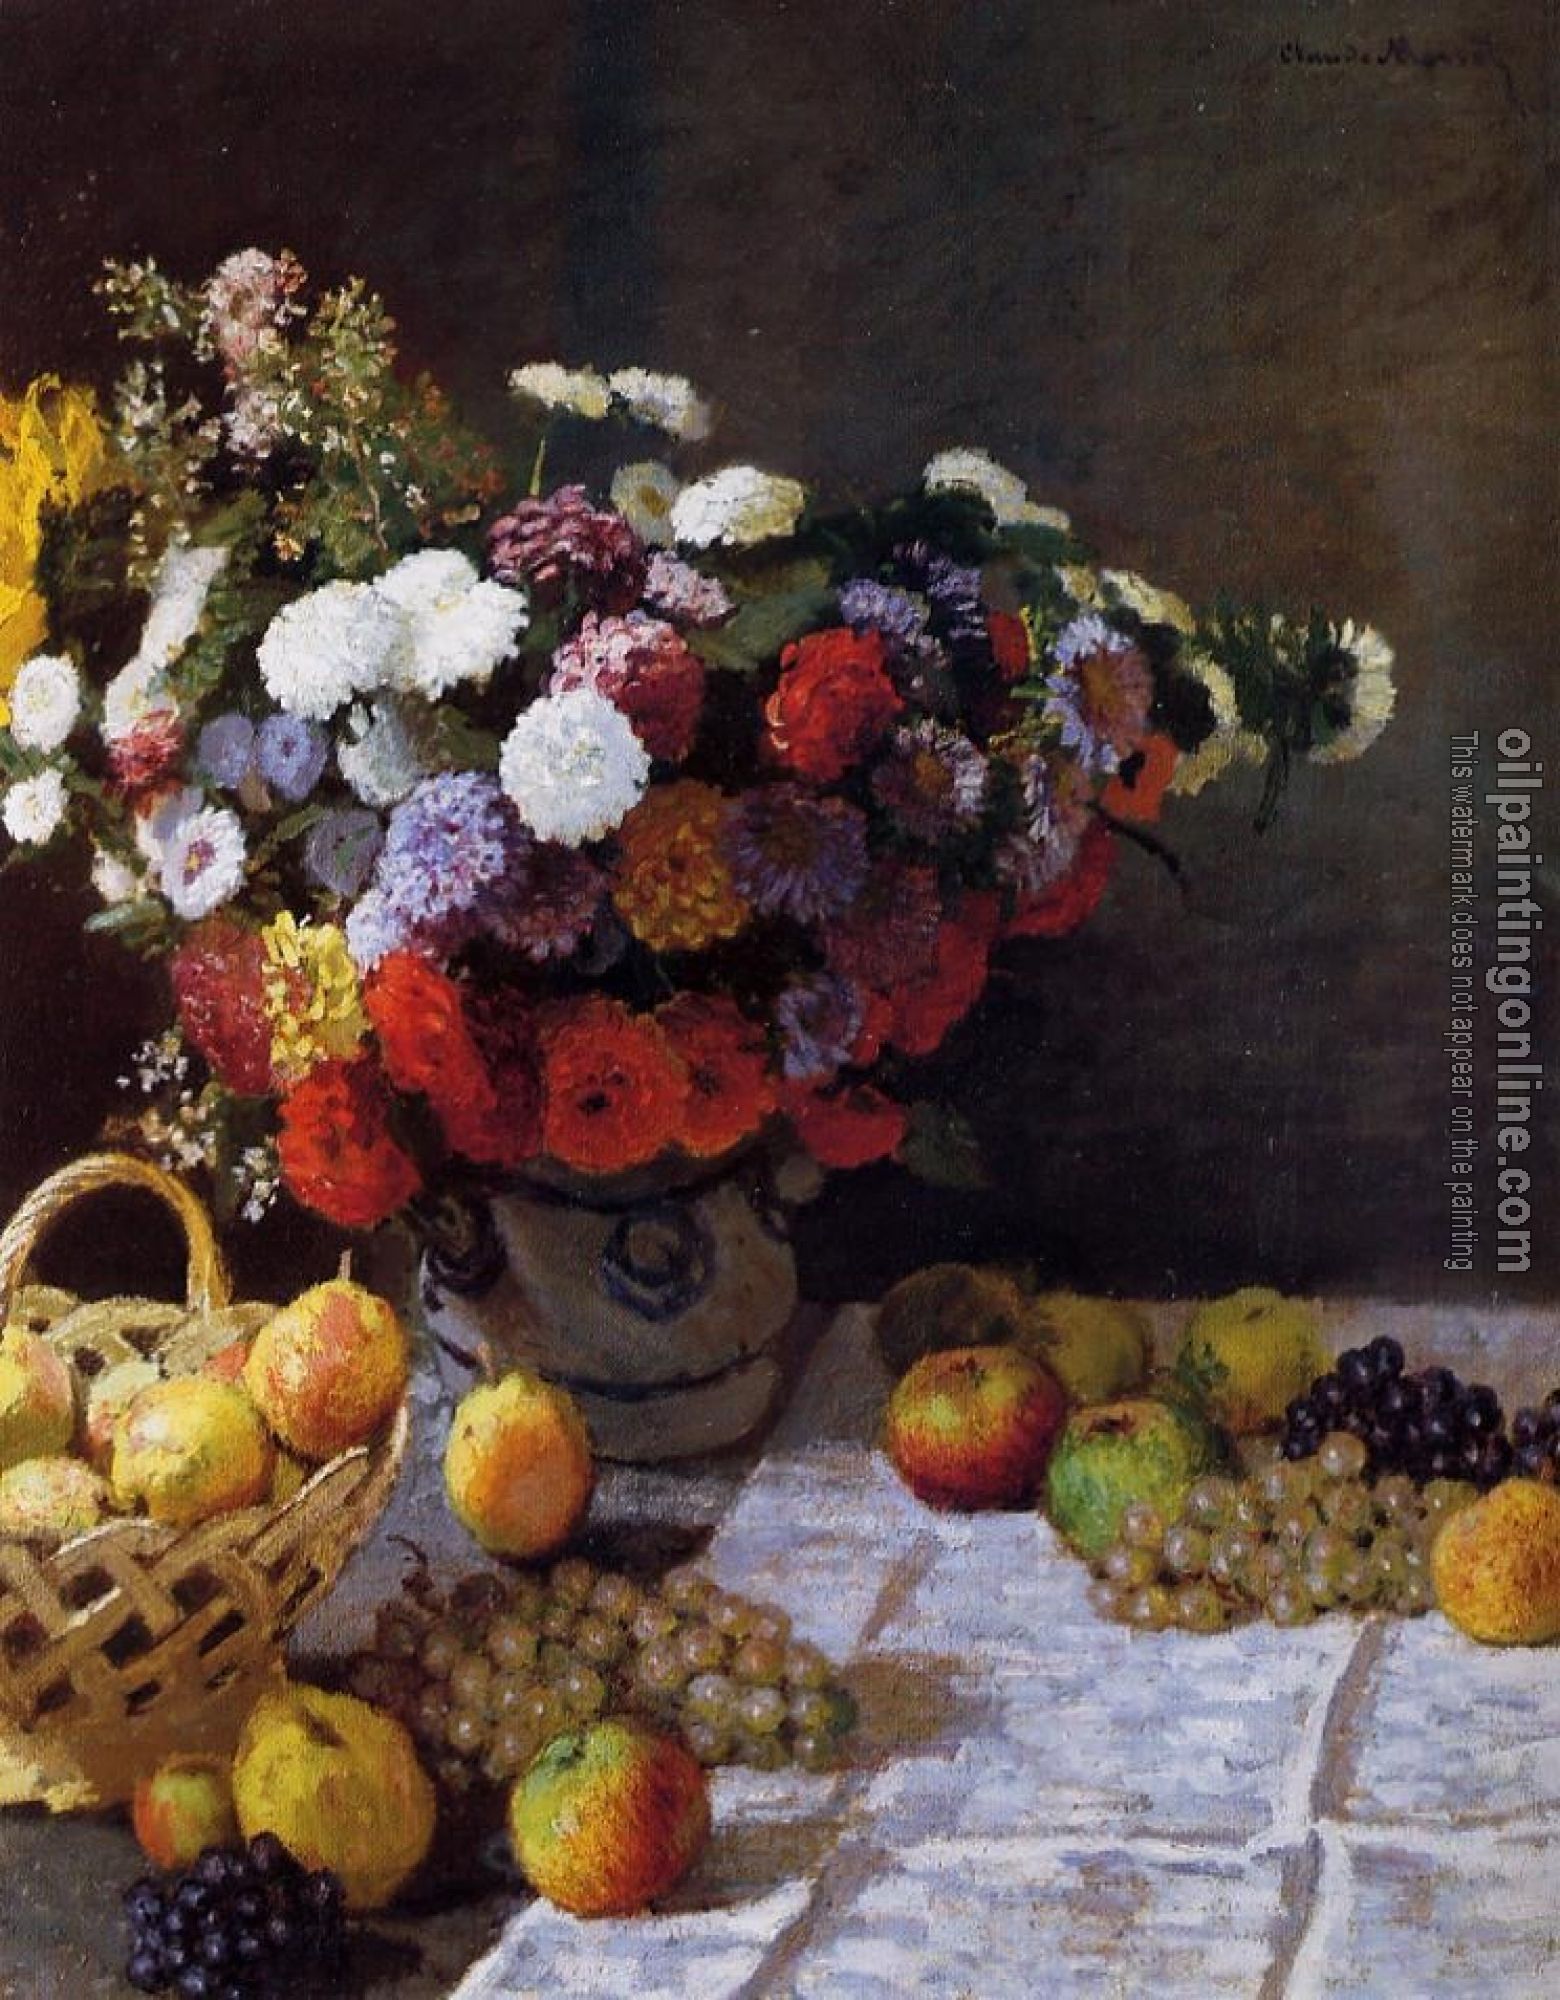 Monet, Claude Oscar - Flowers and Fruit